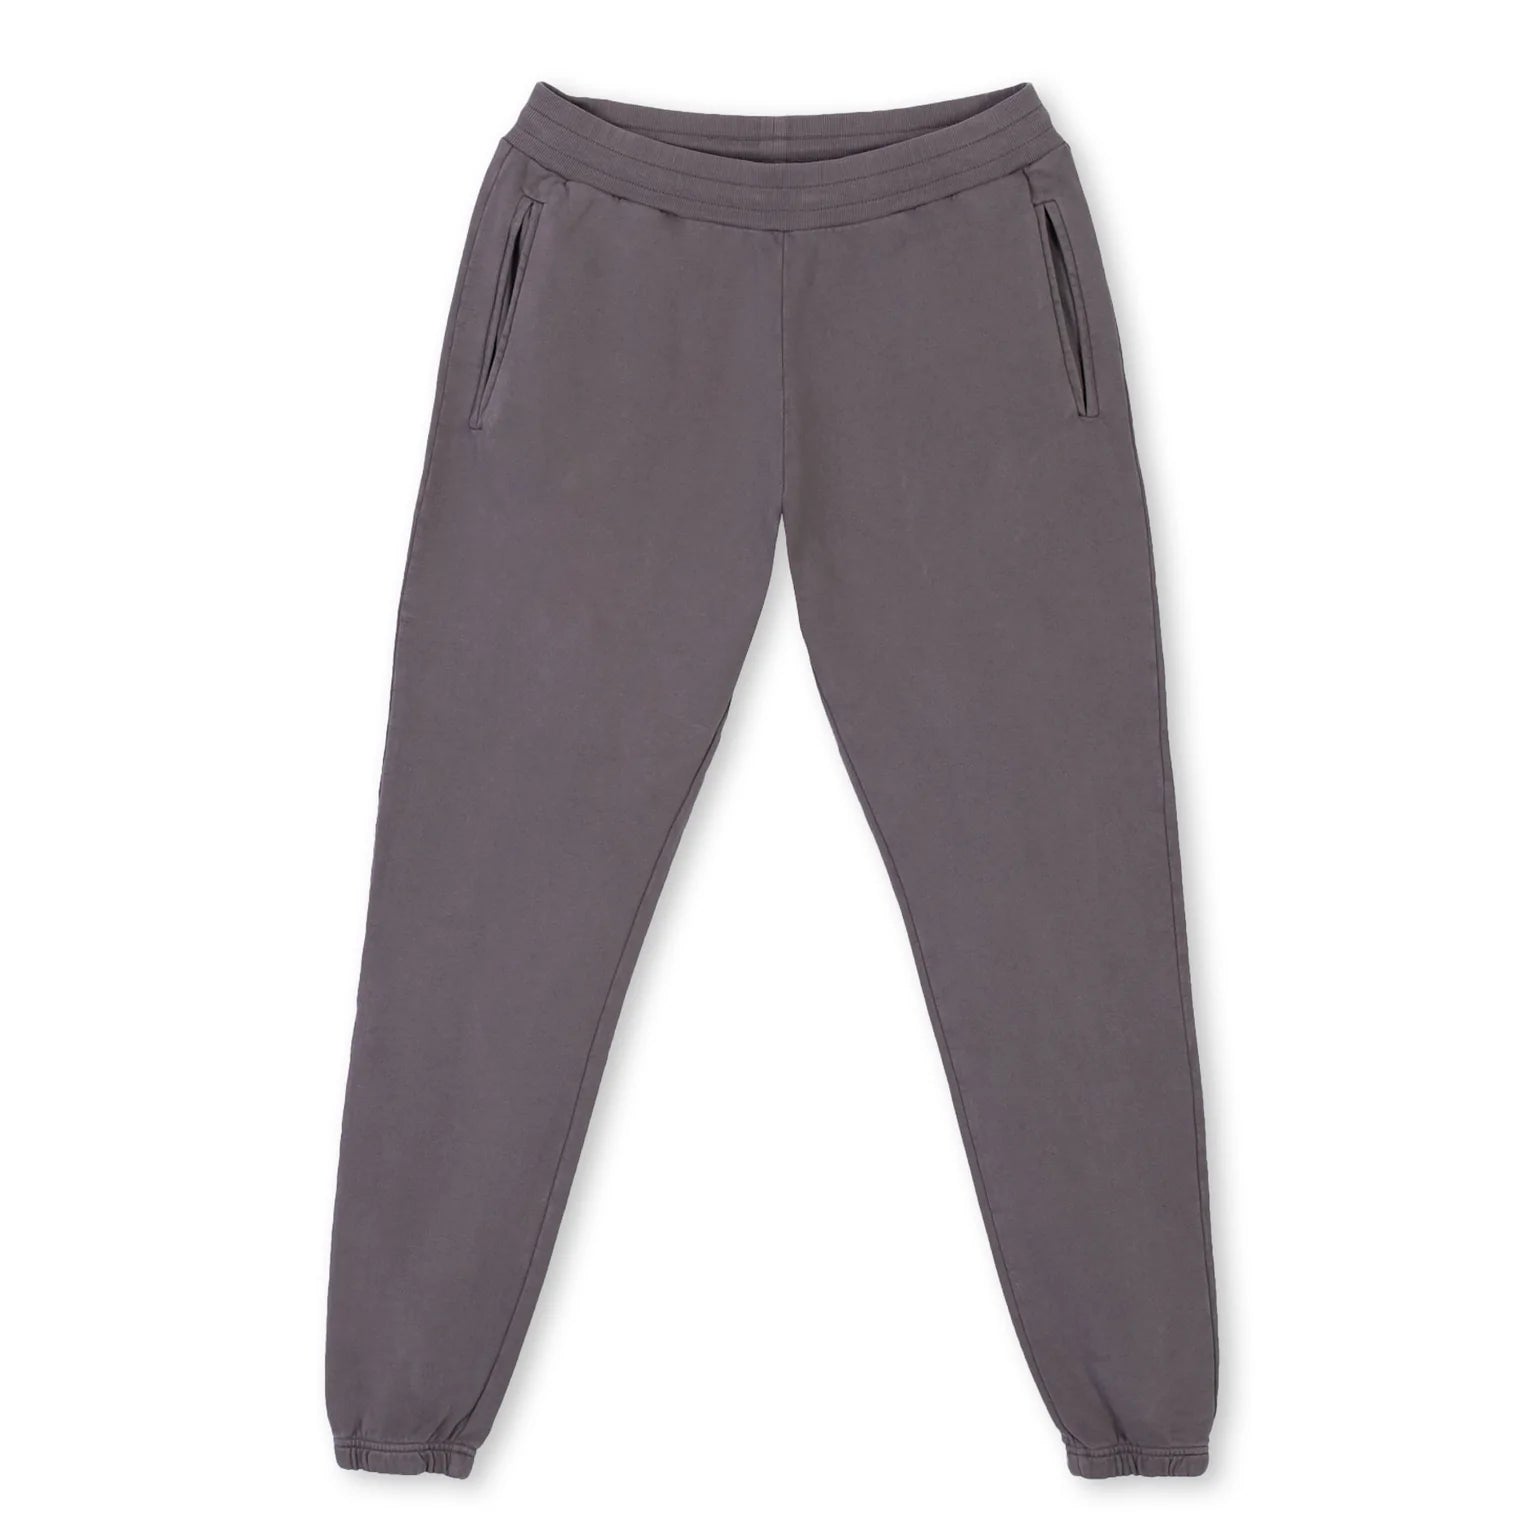 Pigment Grey Sweatpants Original Allure